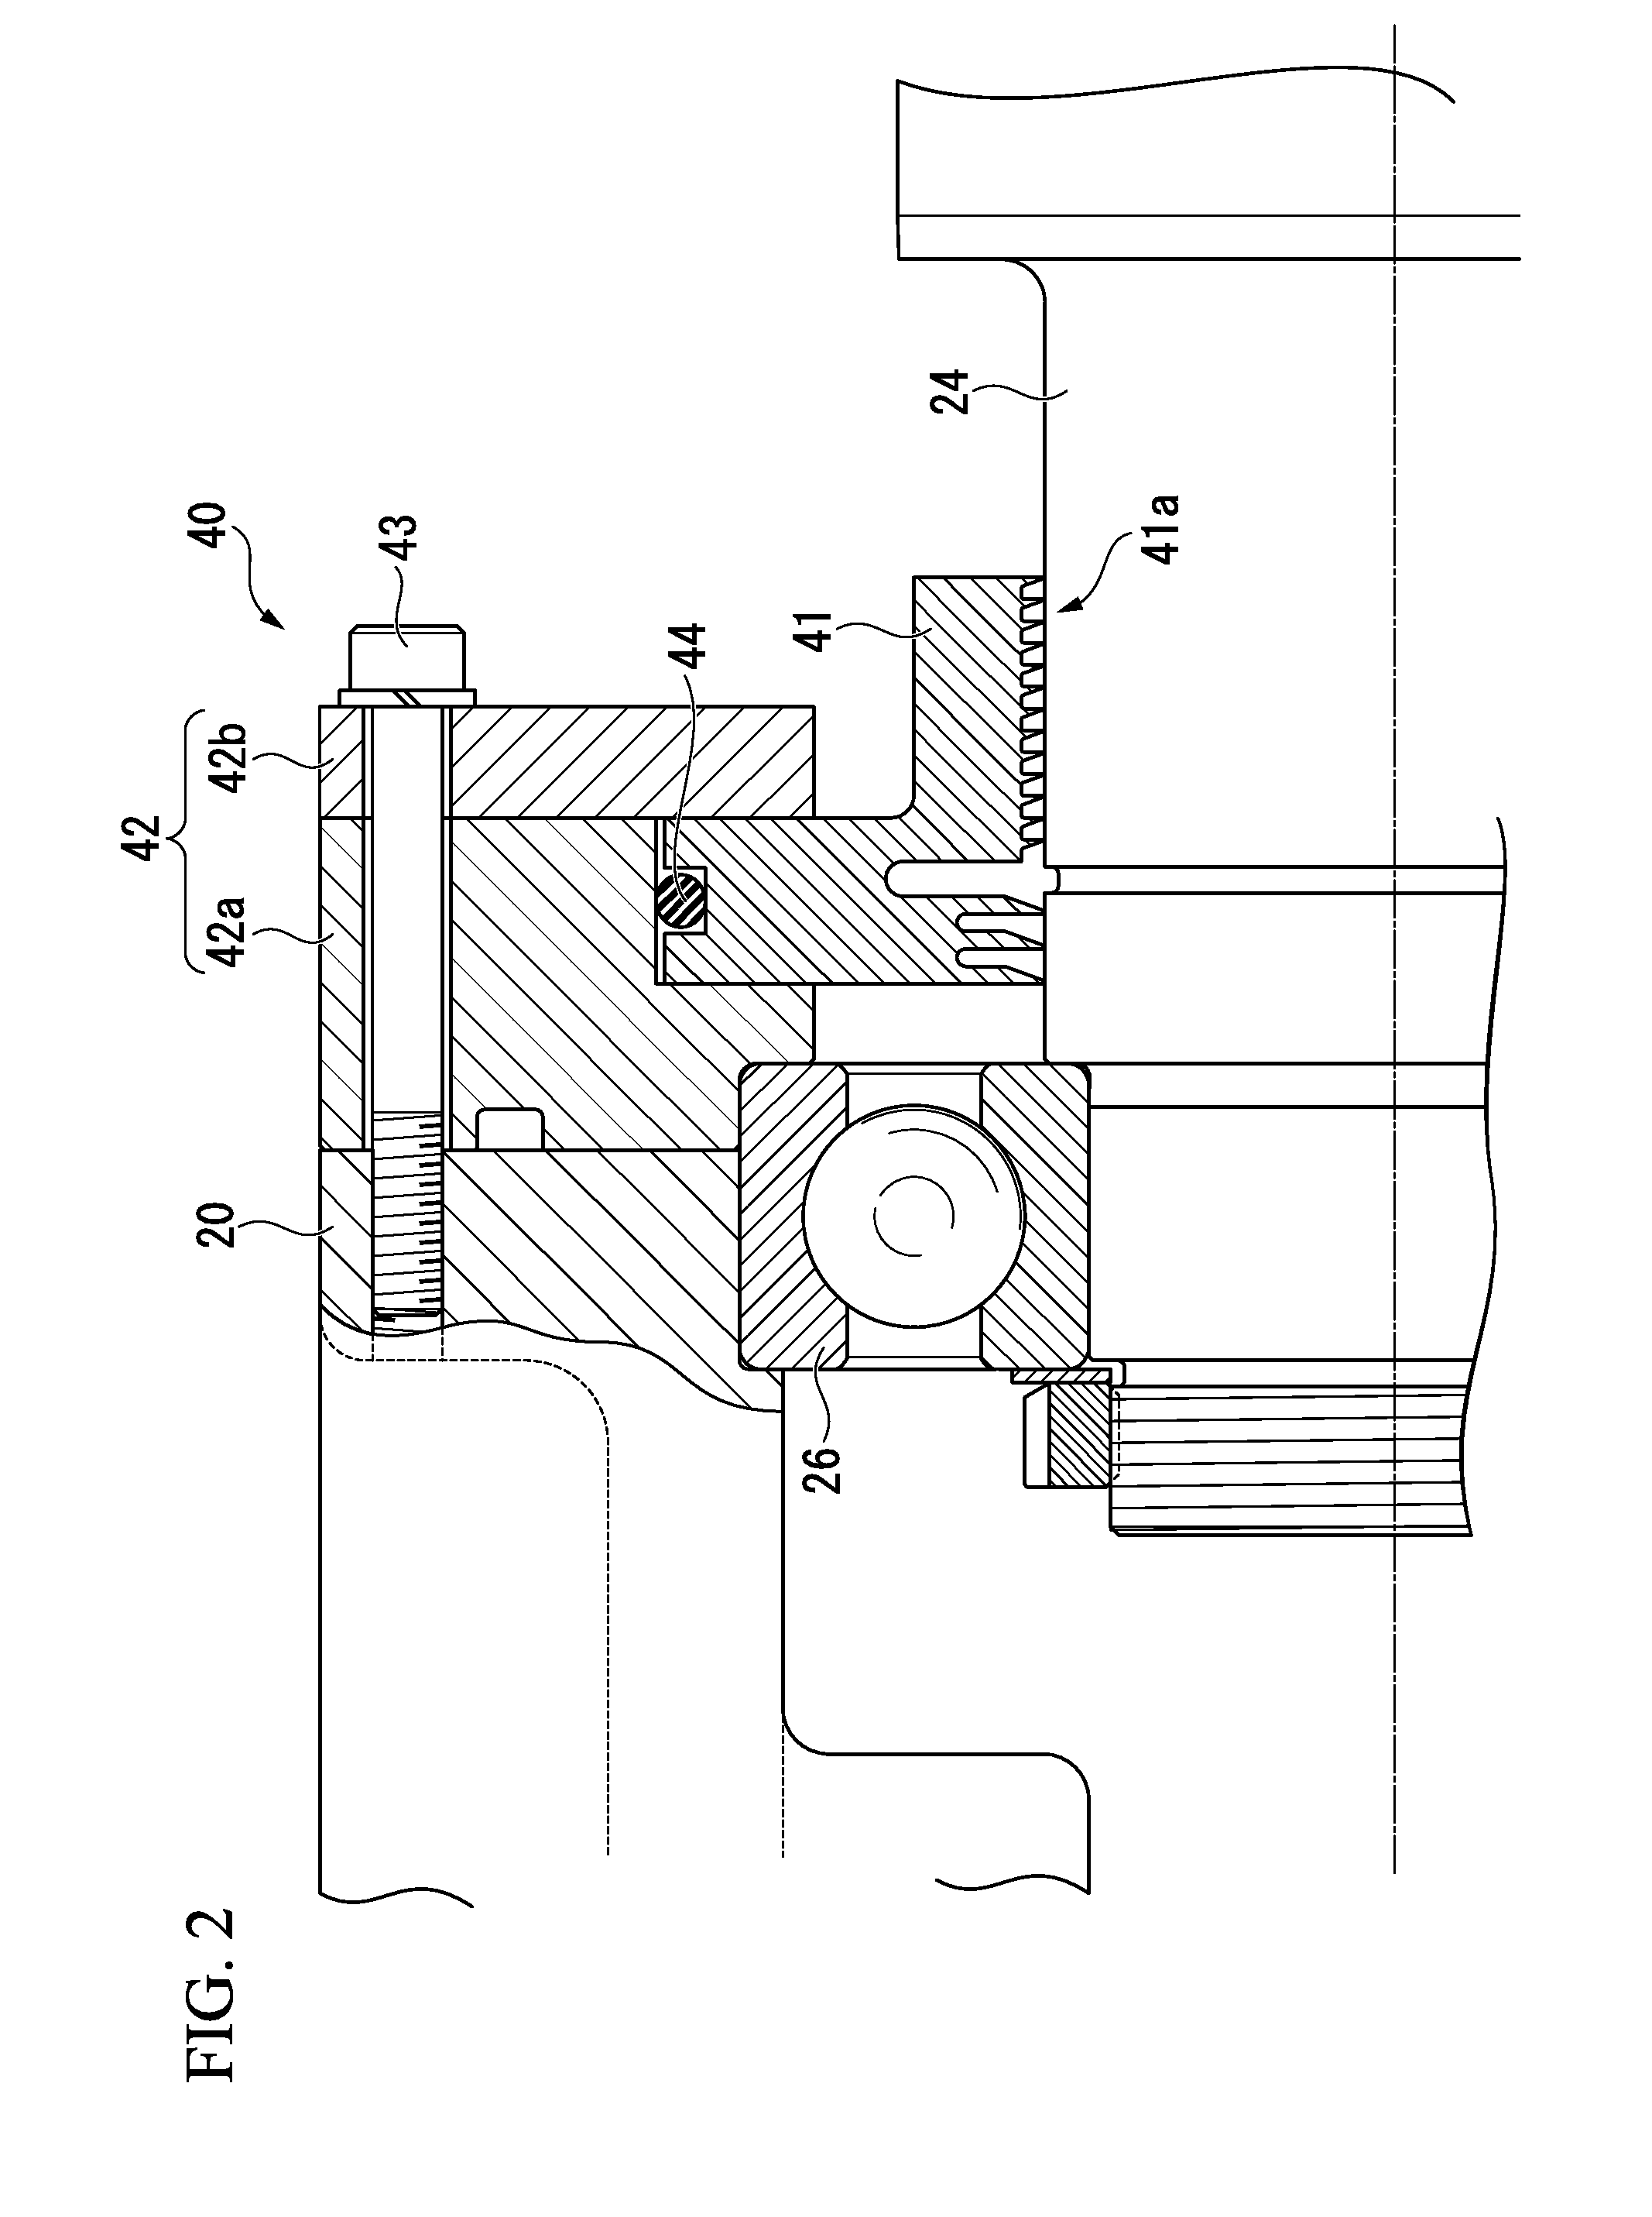 Sealing mechanism and turbo refrigerator